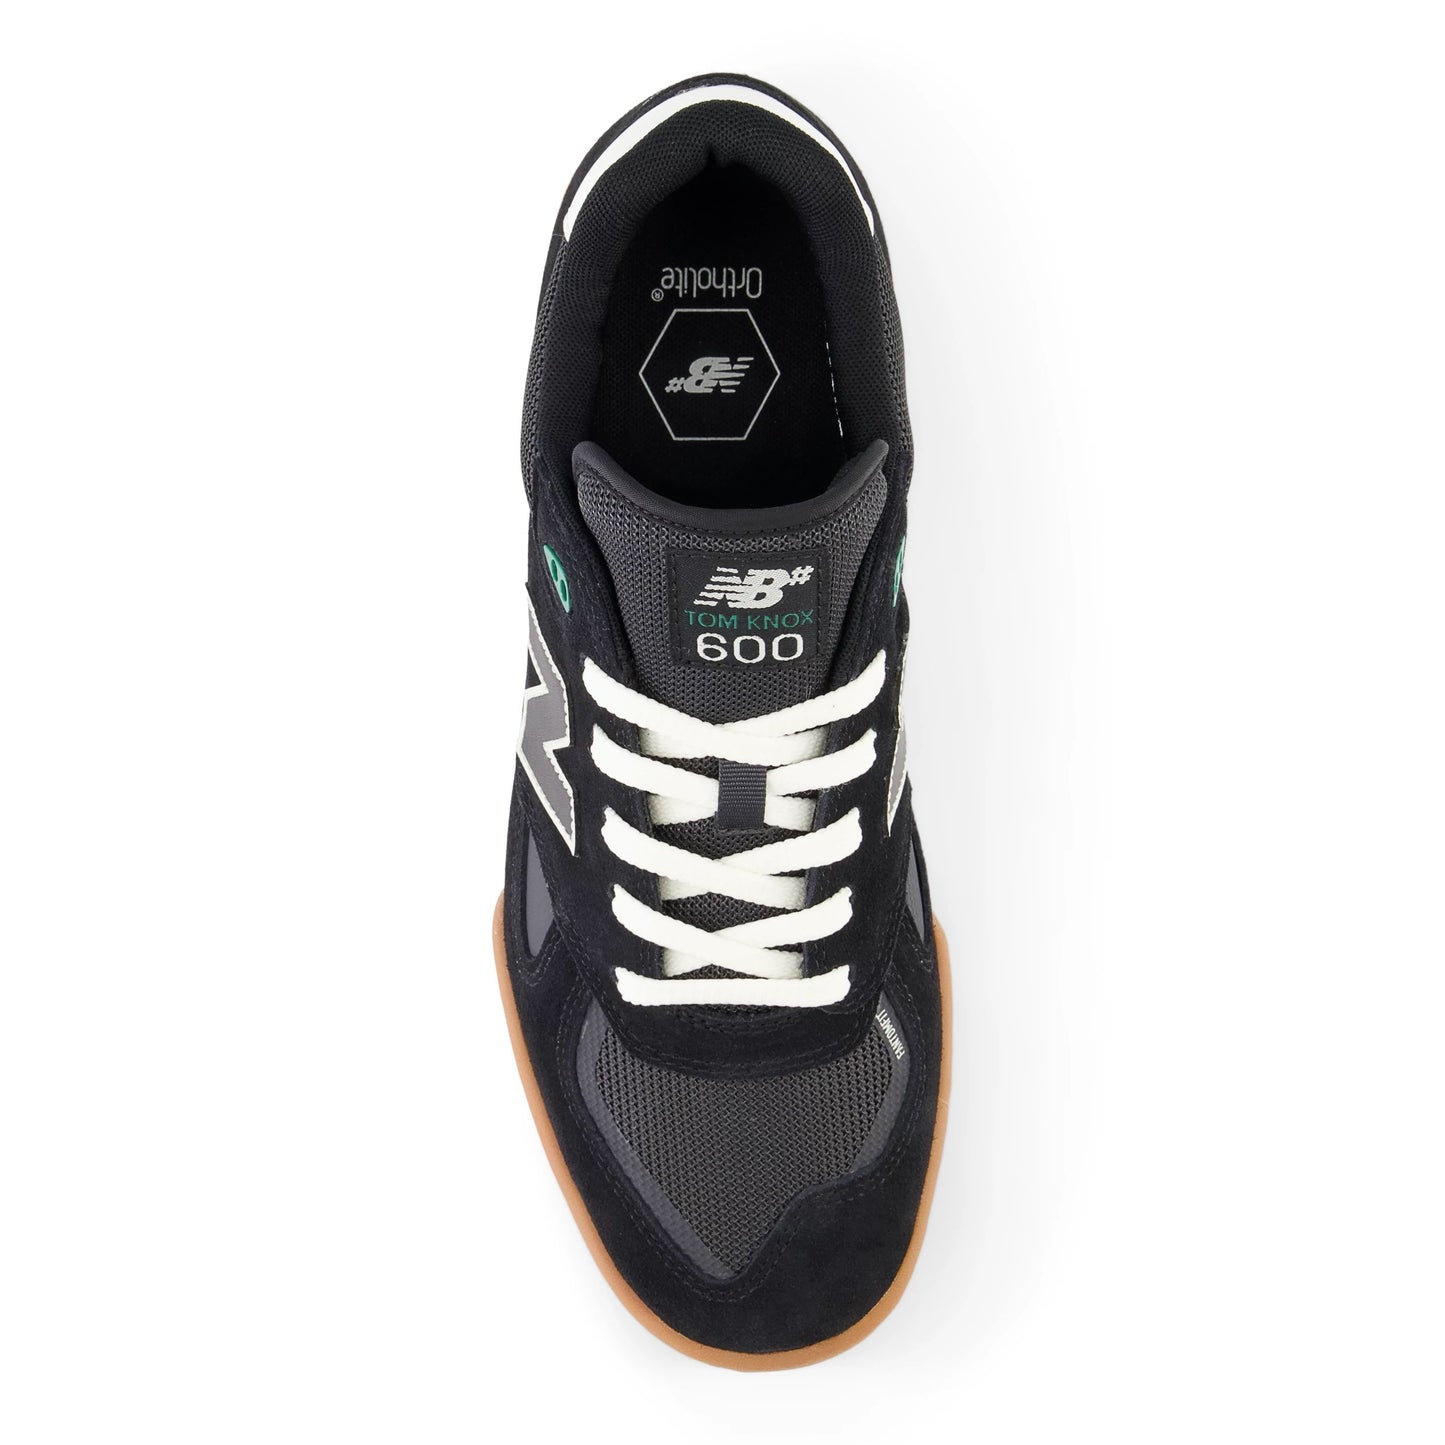 New Balance Numeric 'Tom Knox 600' Skate Shoes (Black / White)